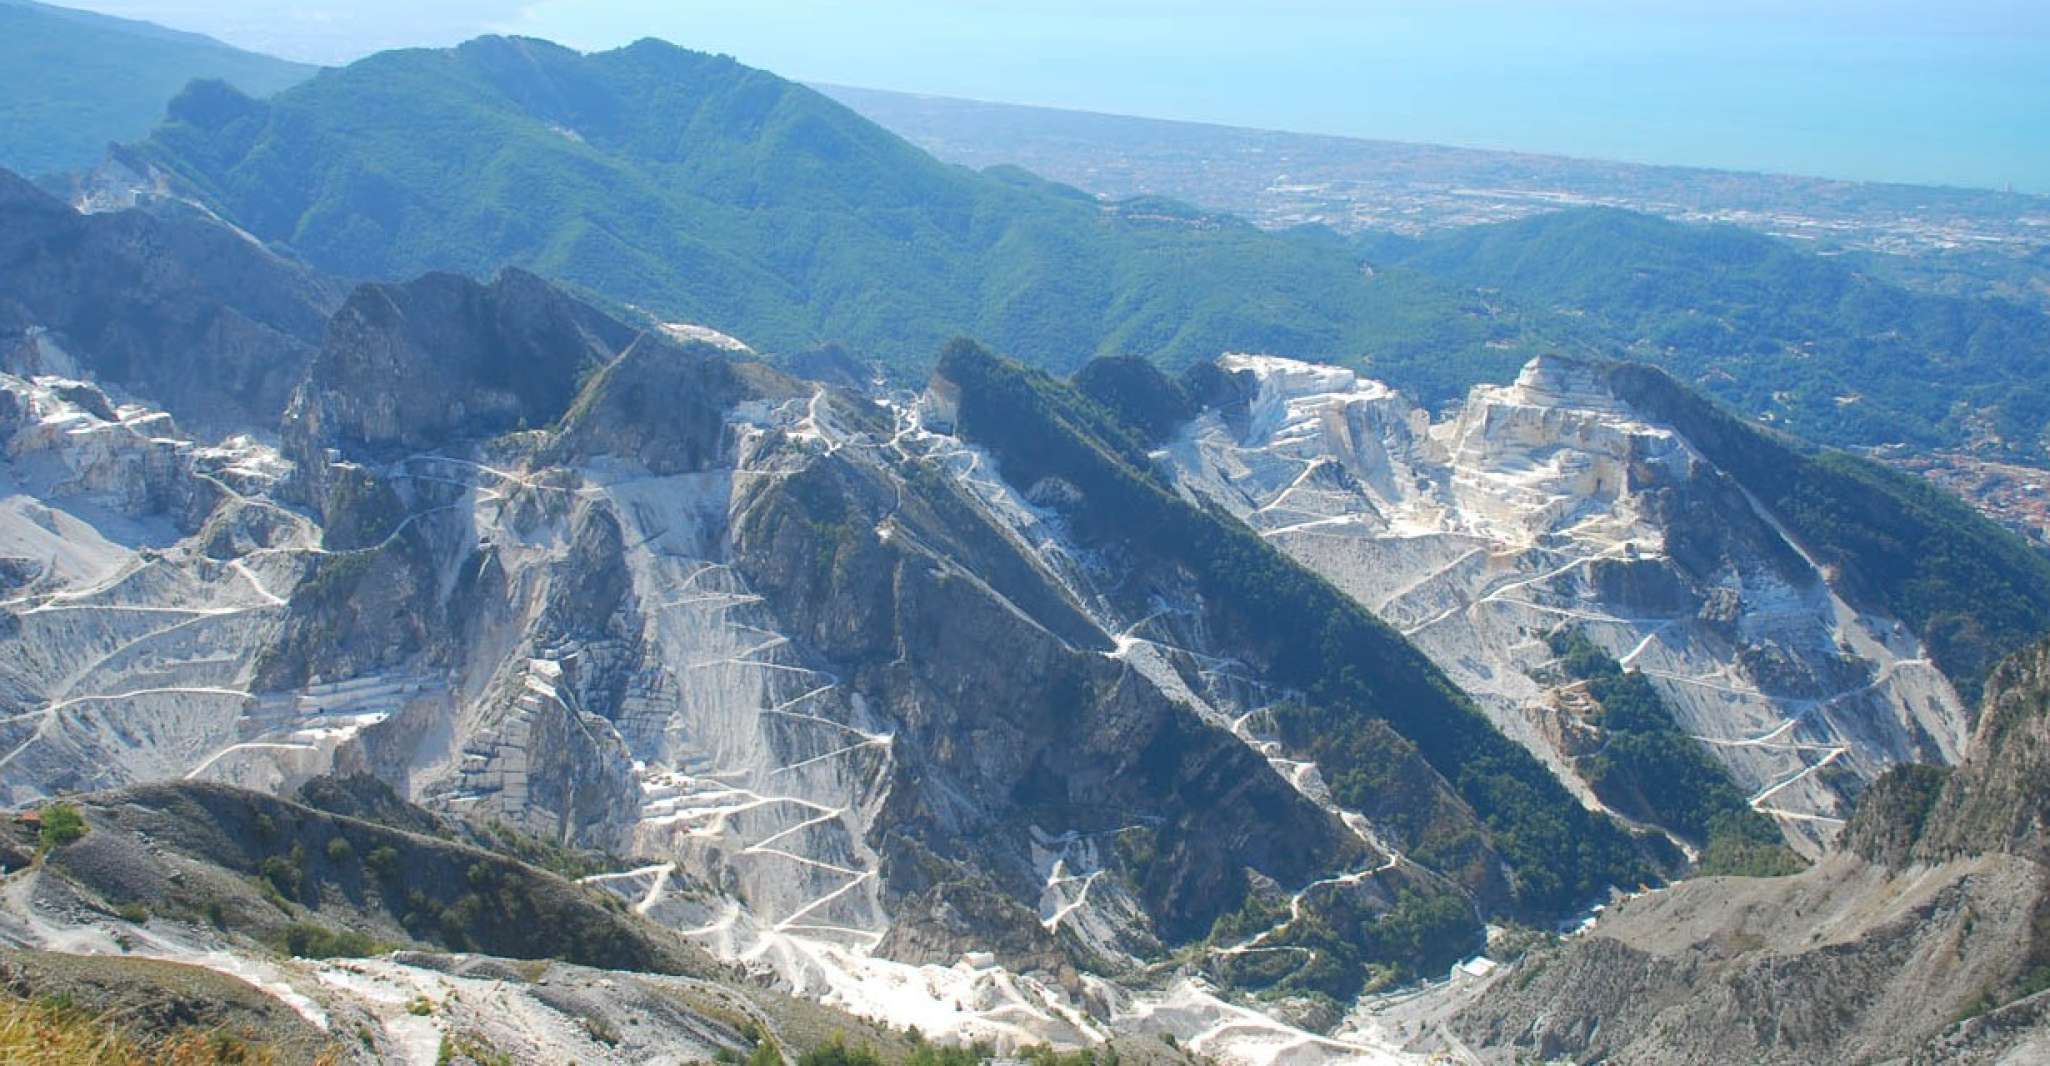 From Carrara, Marble Quarries Jeep Tour with Lardo Tasting - Housity